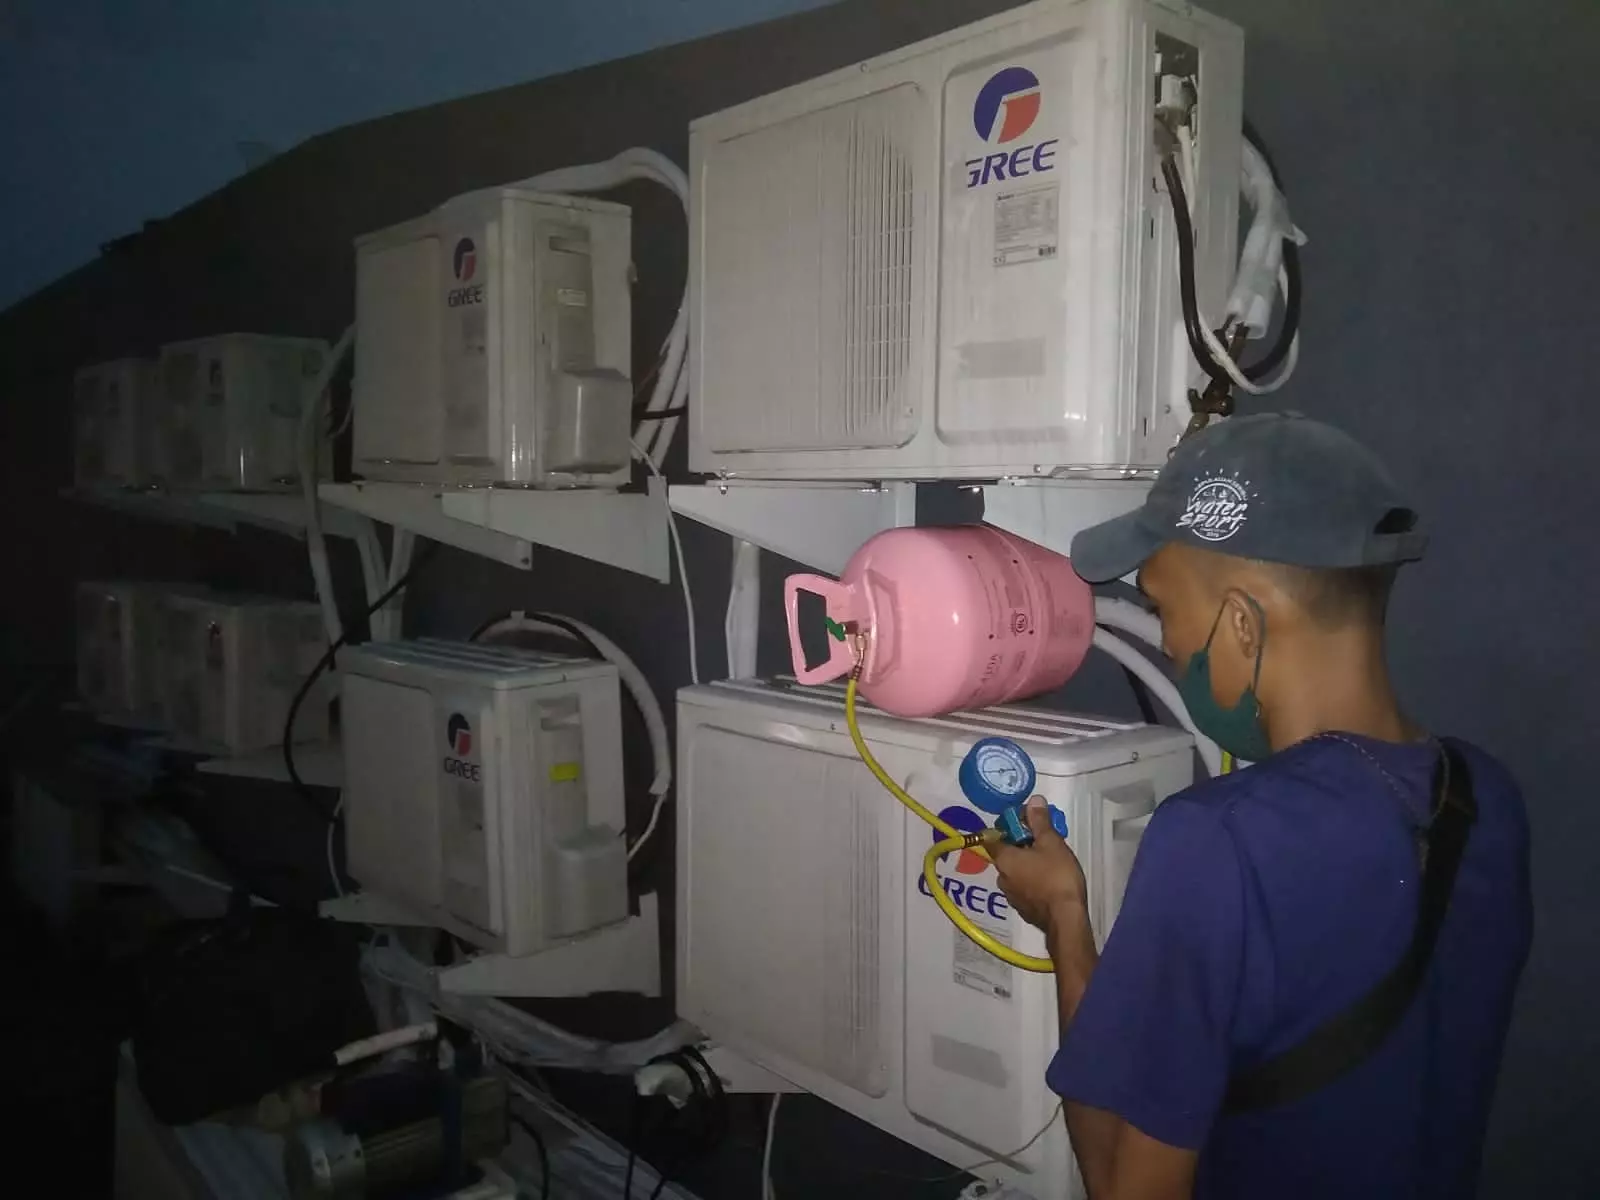 
	
	
	
		Cuci Air Conditioner
		
		 Ciputat
		
	
	
	- Terkemuka dengan Teknisi Cakap
	
